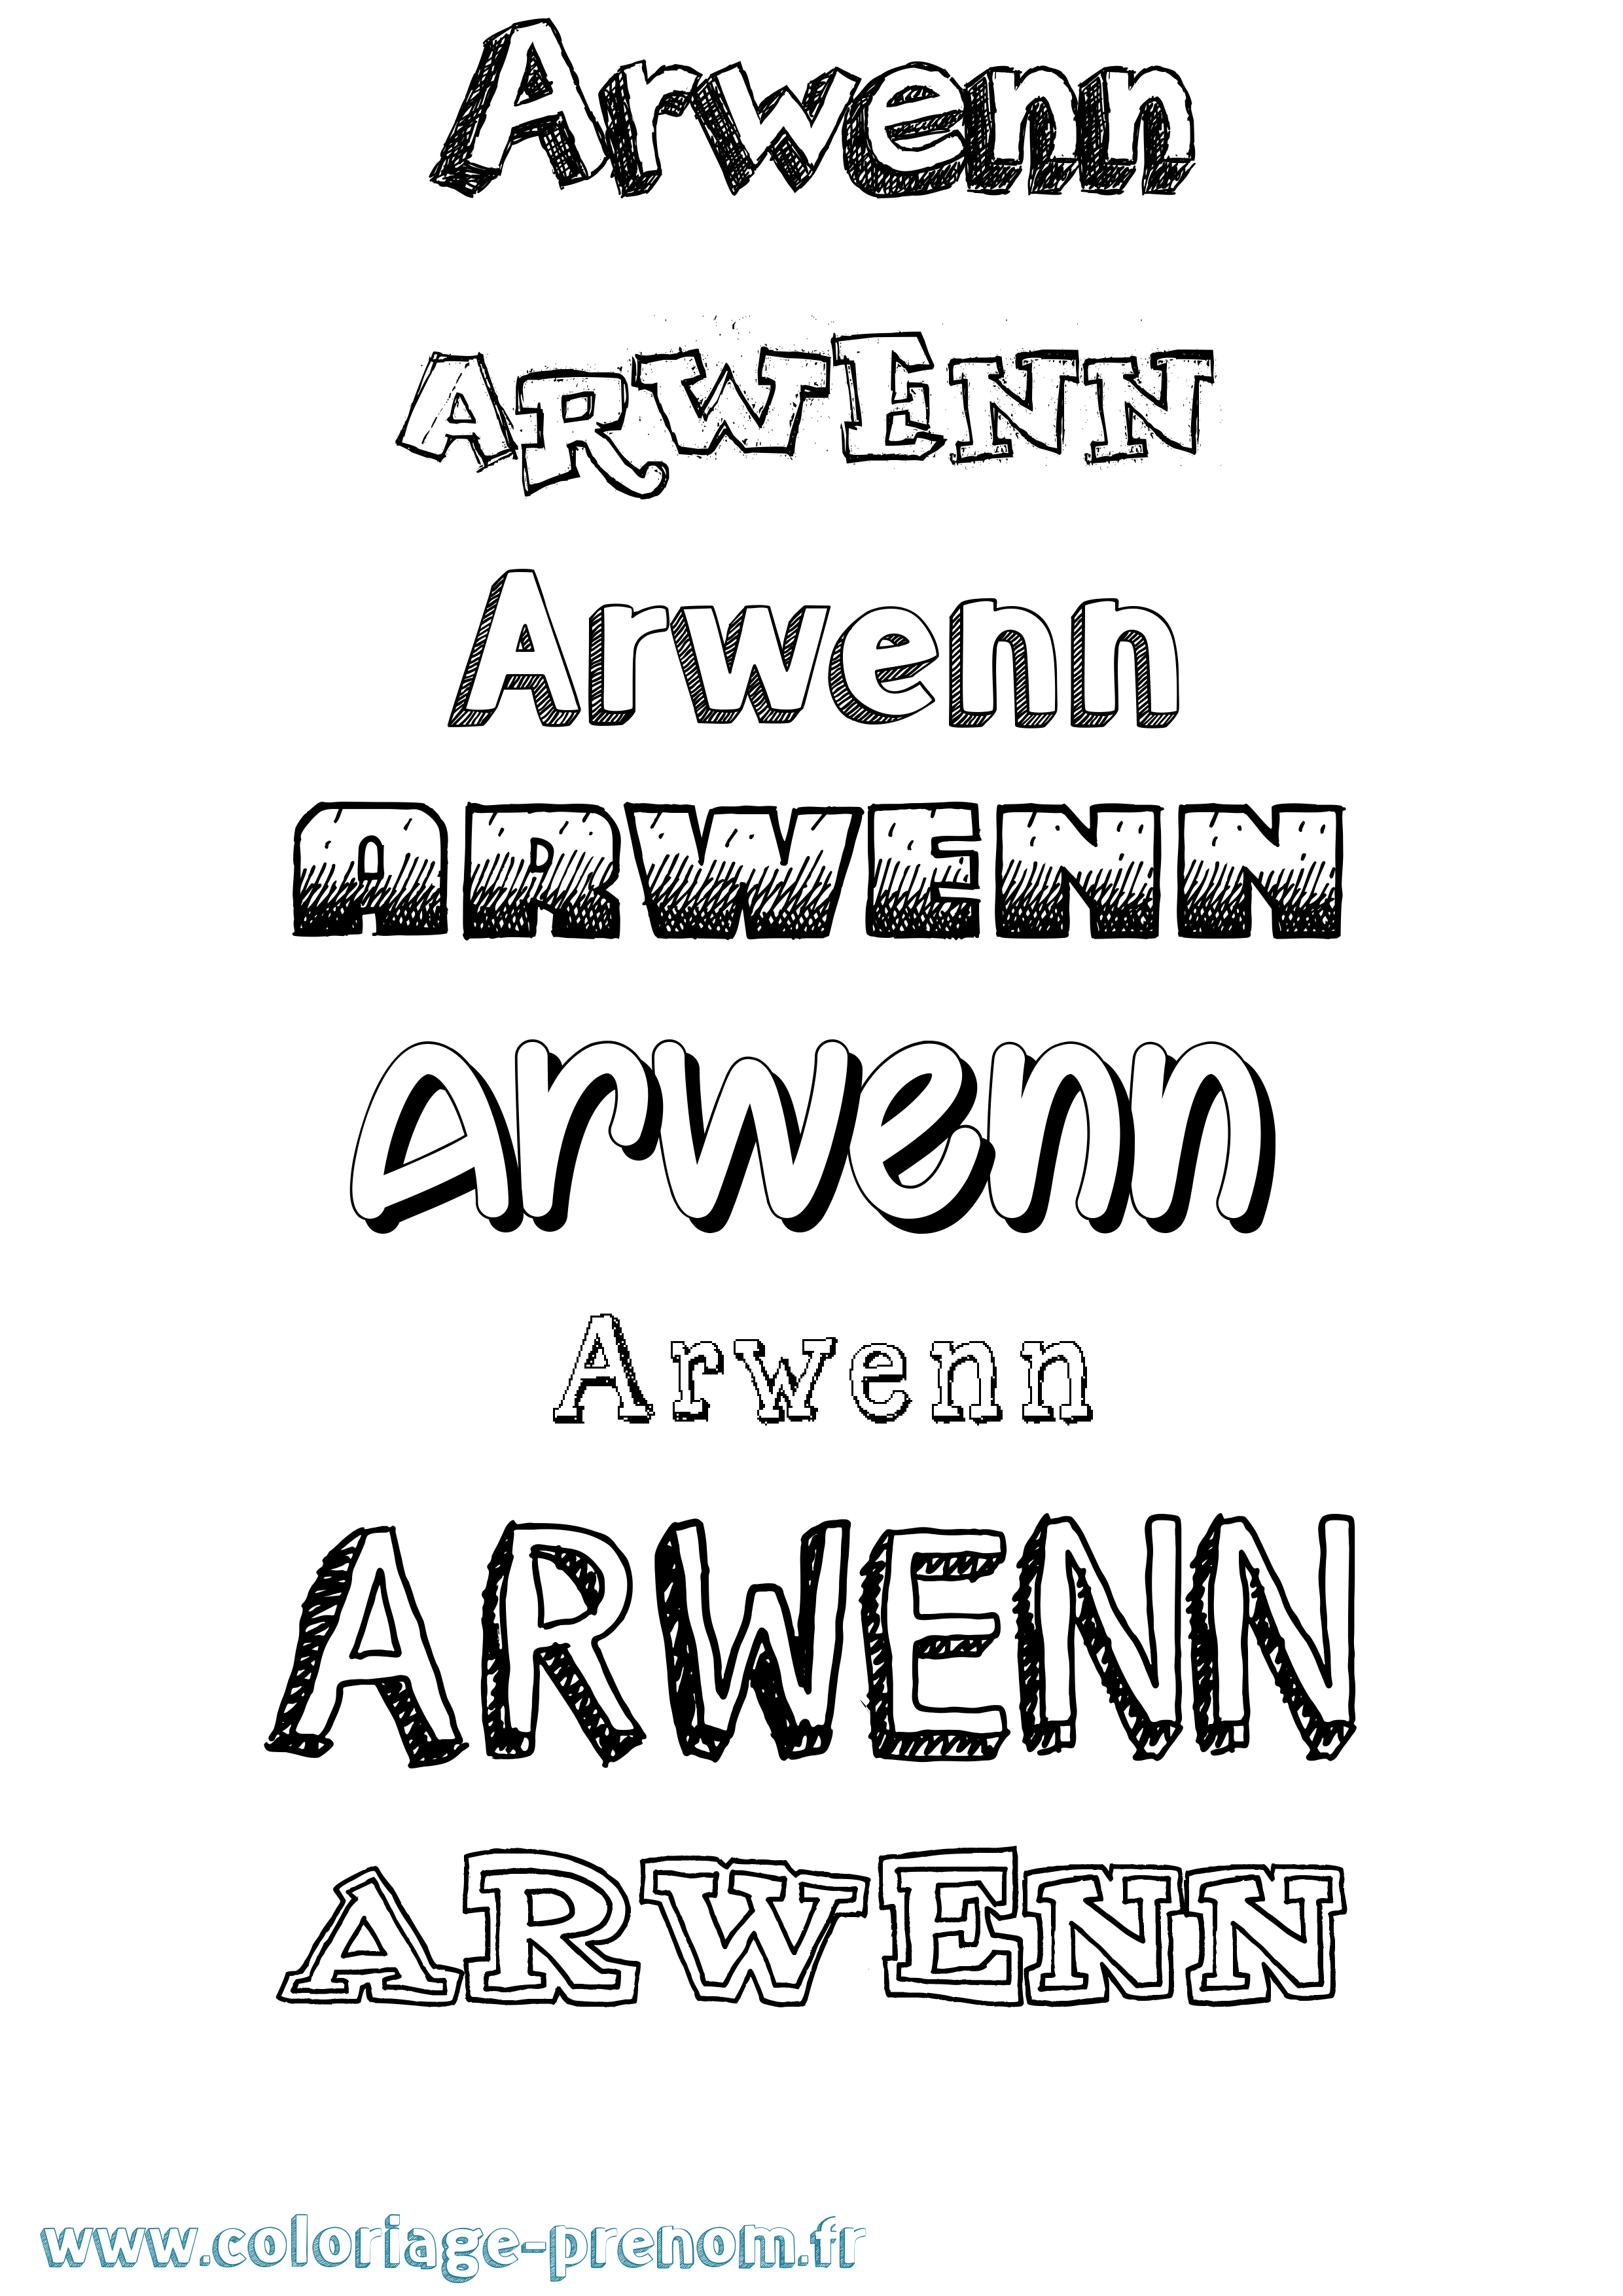 Coloriage prénom Arwenn Dessiné